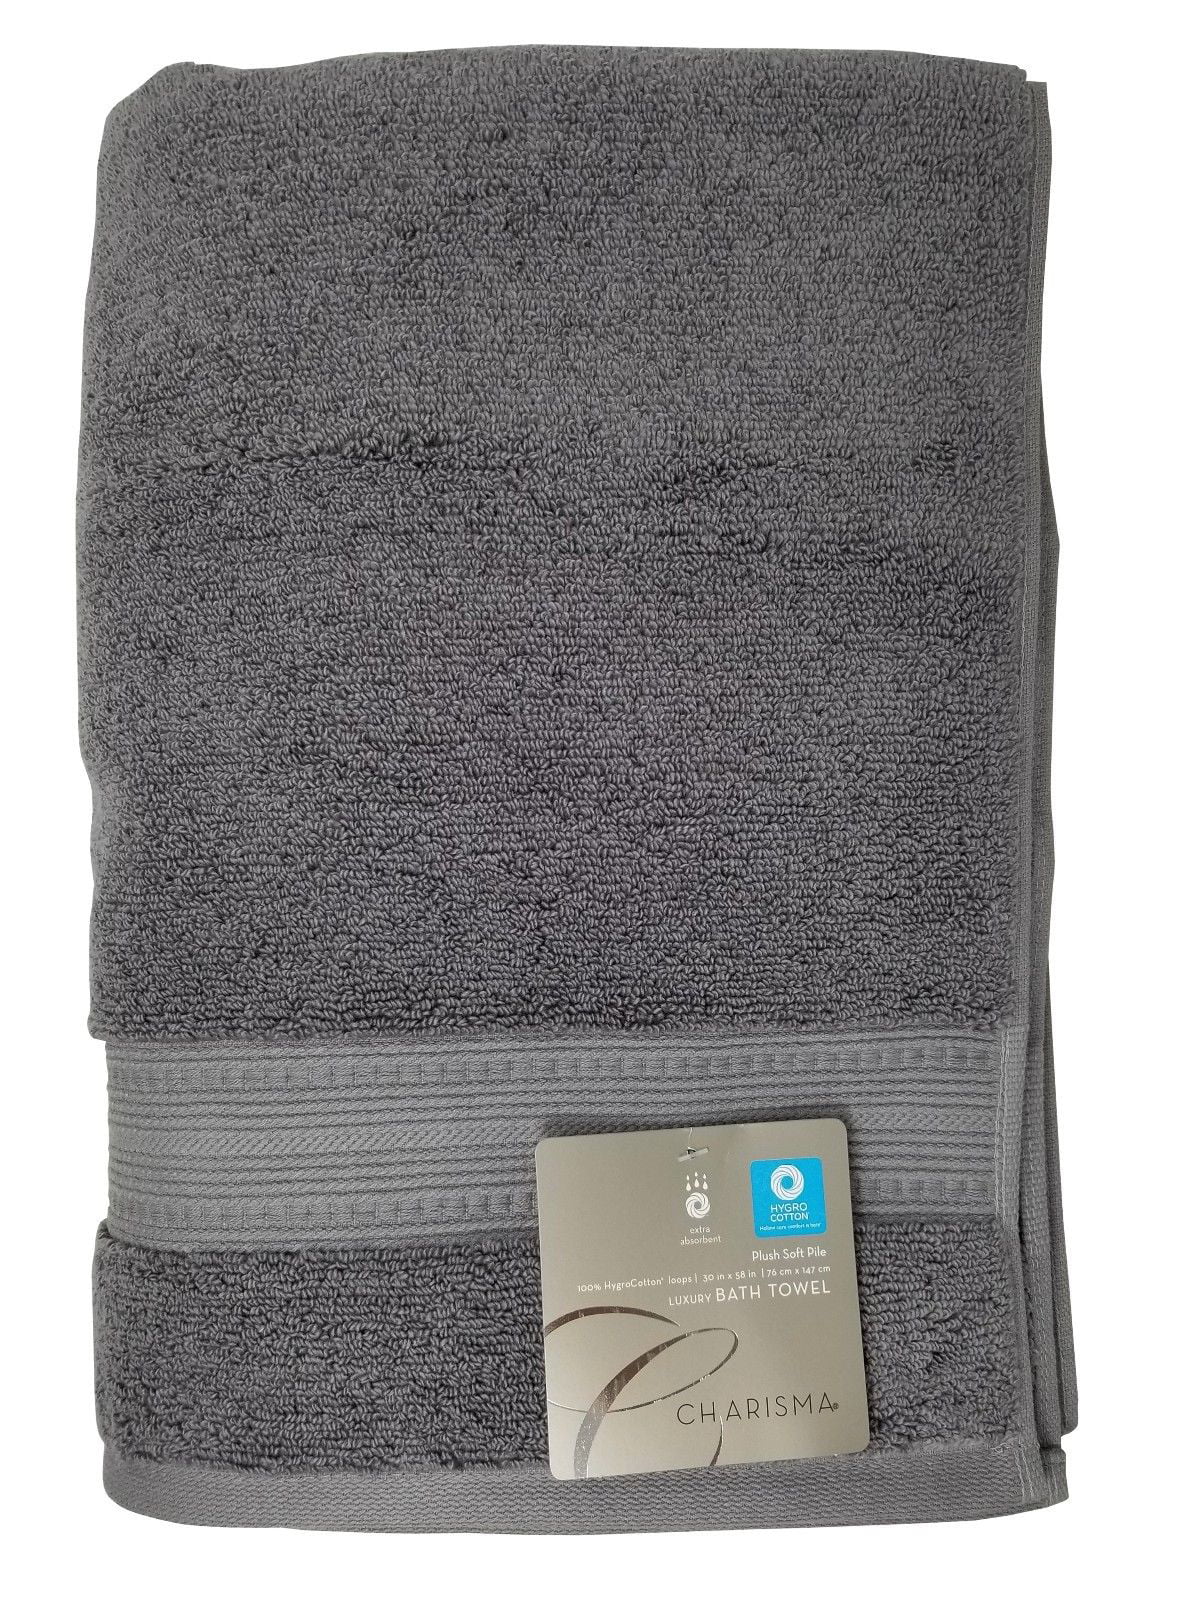 100% Hygro Cotton in Gunmetal Gray 2 Pack Charisma Luxury Bath Towel 